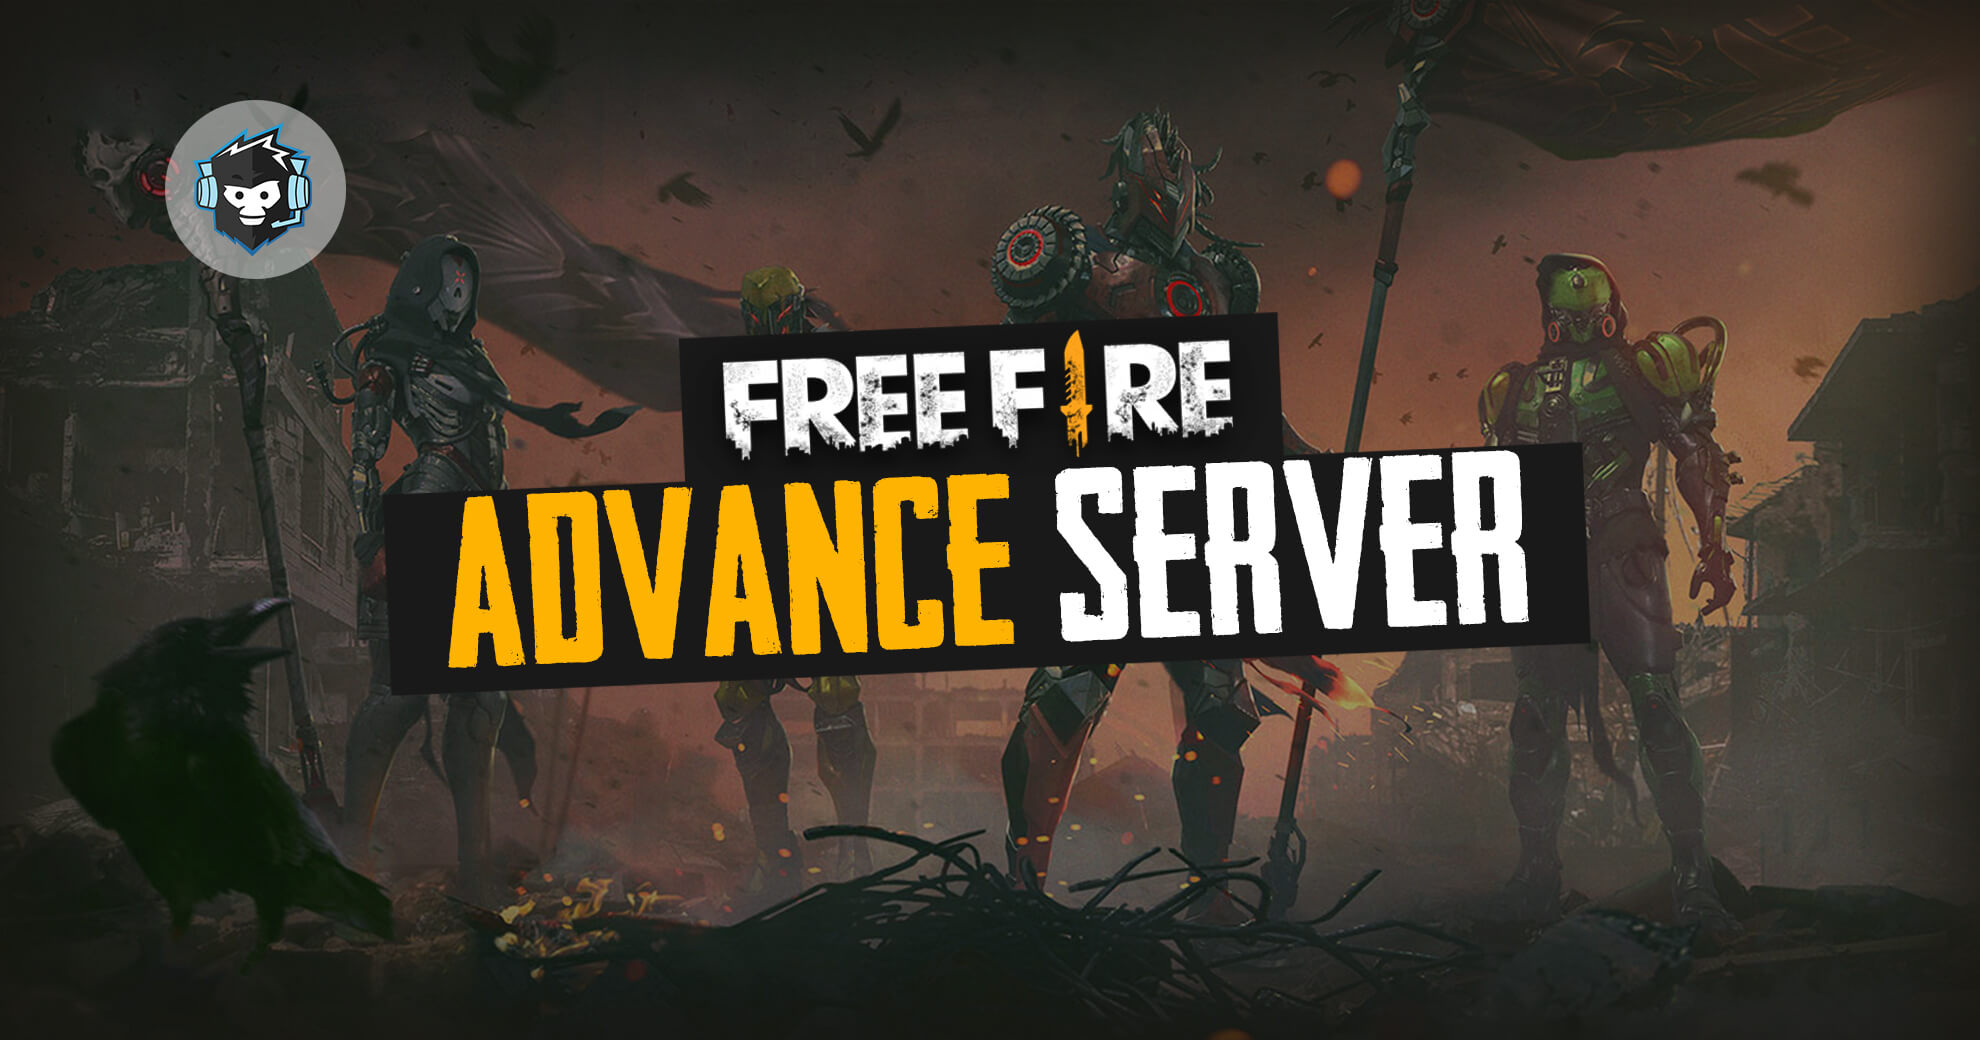 free fire advance server